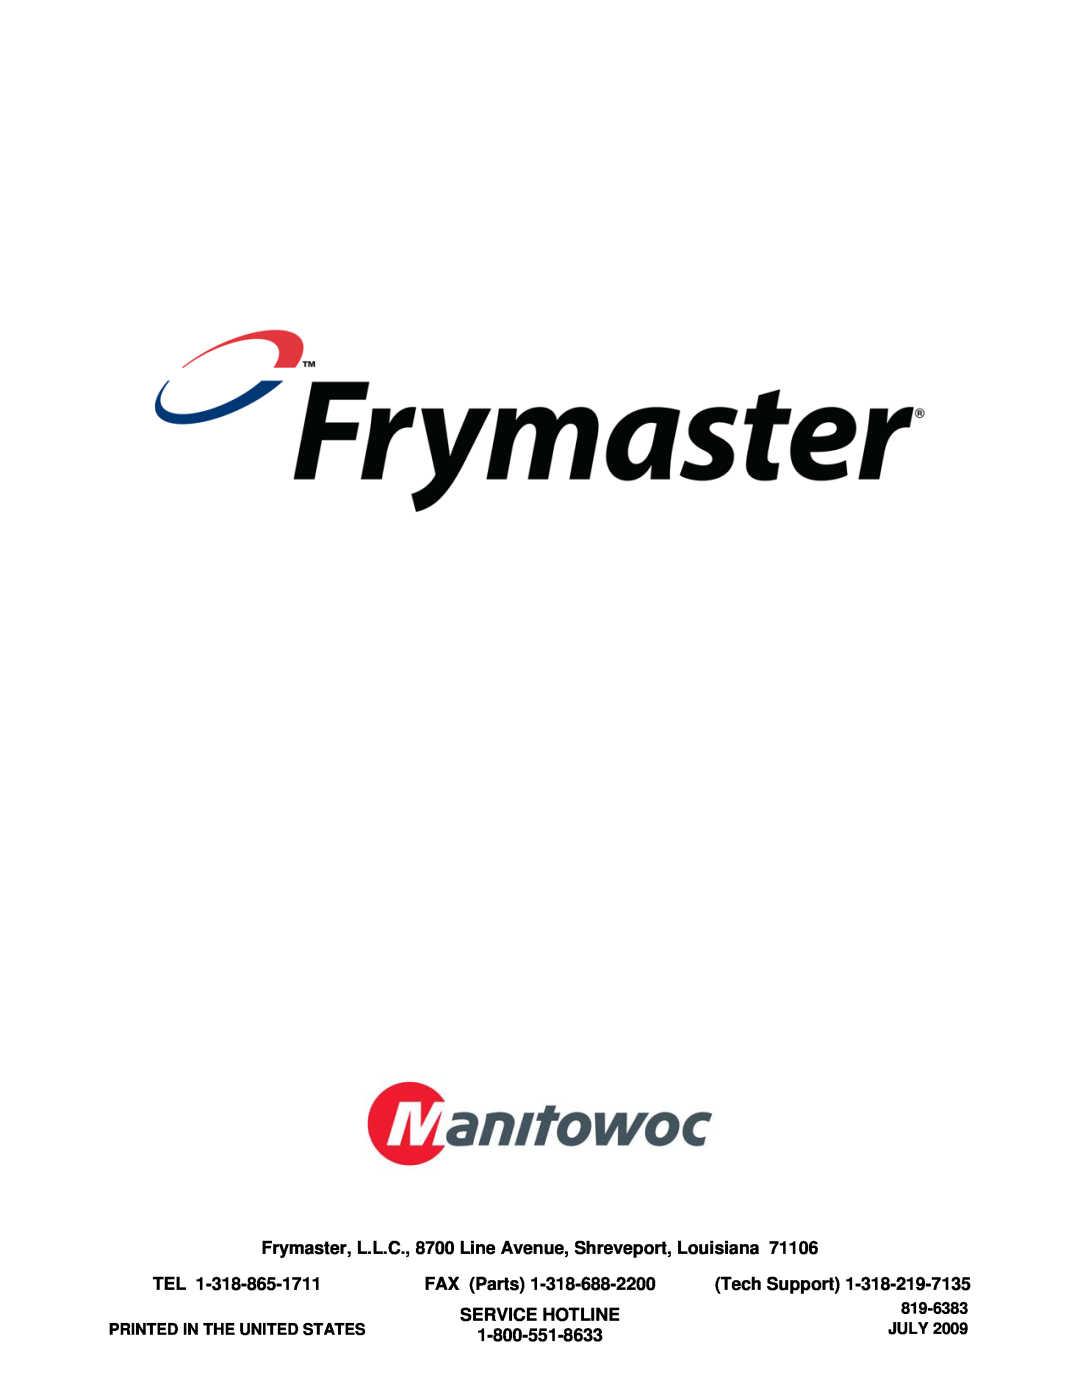 Frymaster YFPRE1817E Frymaster, L.L.C., 8700 Line Avenue, Shreveport, Louisiana, FAX Parts, Tech Support, Service Hotline 